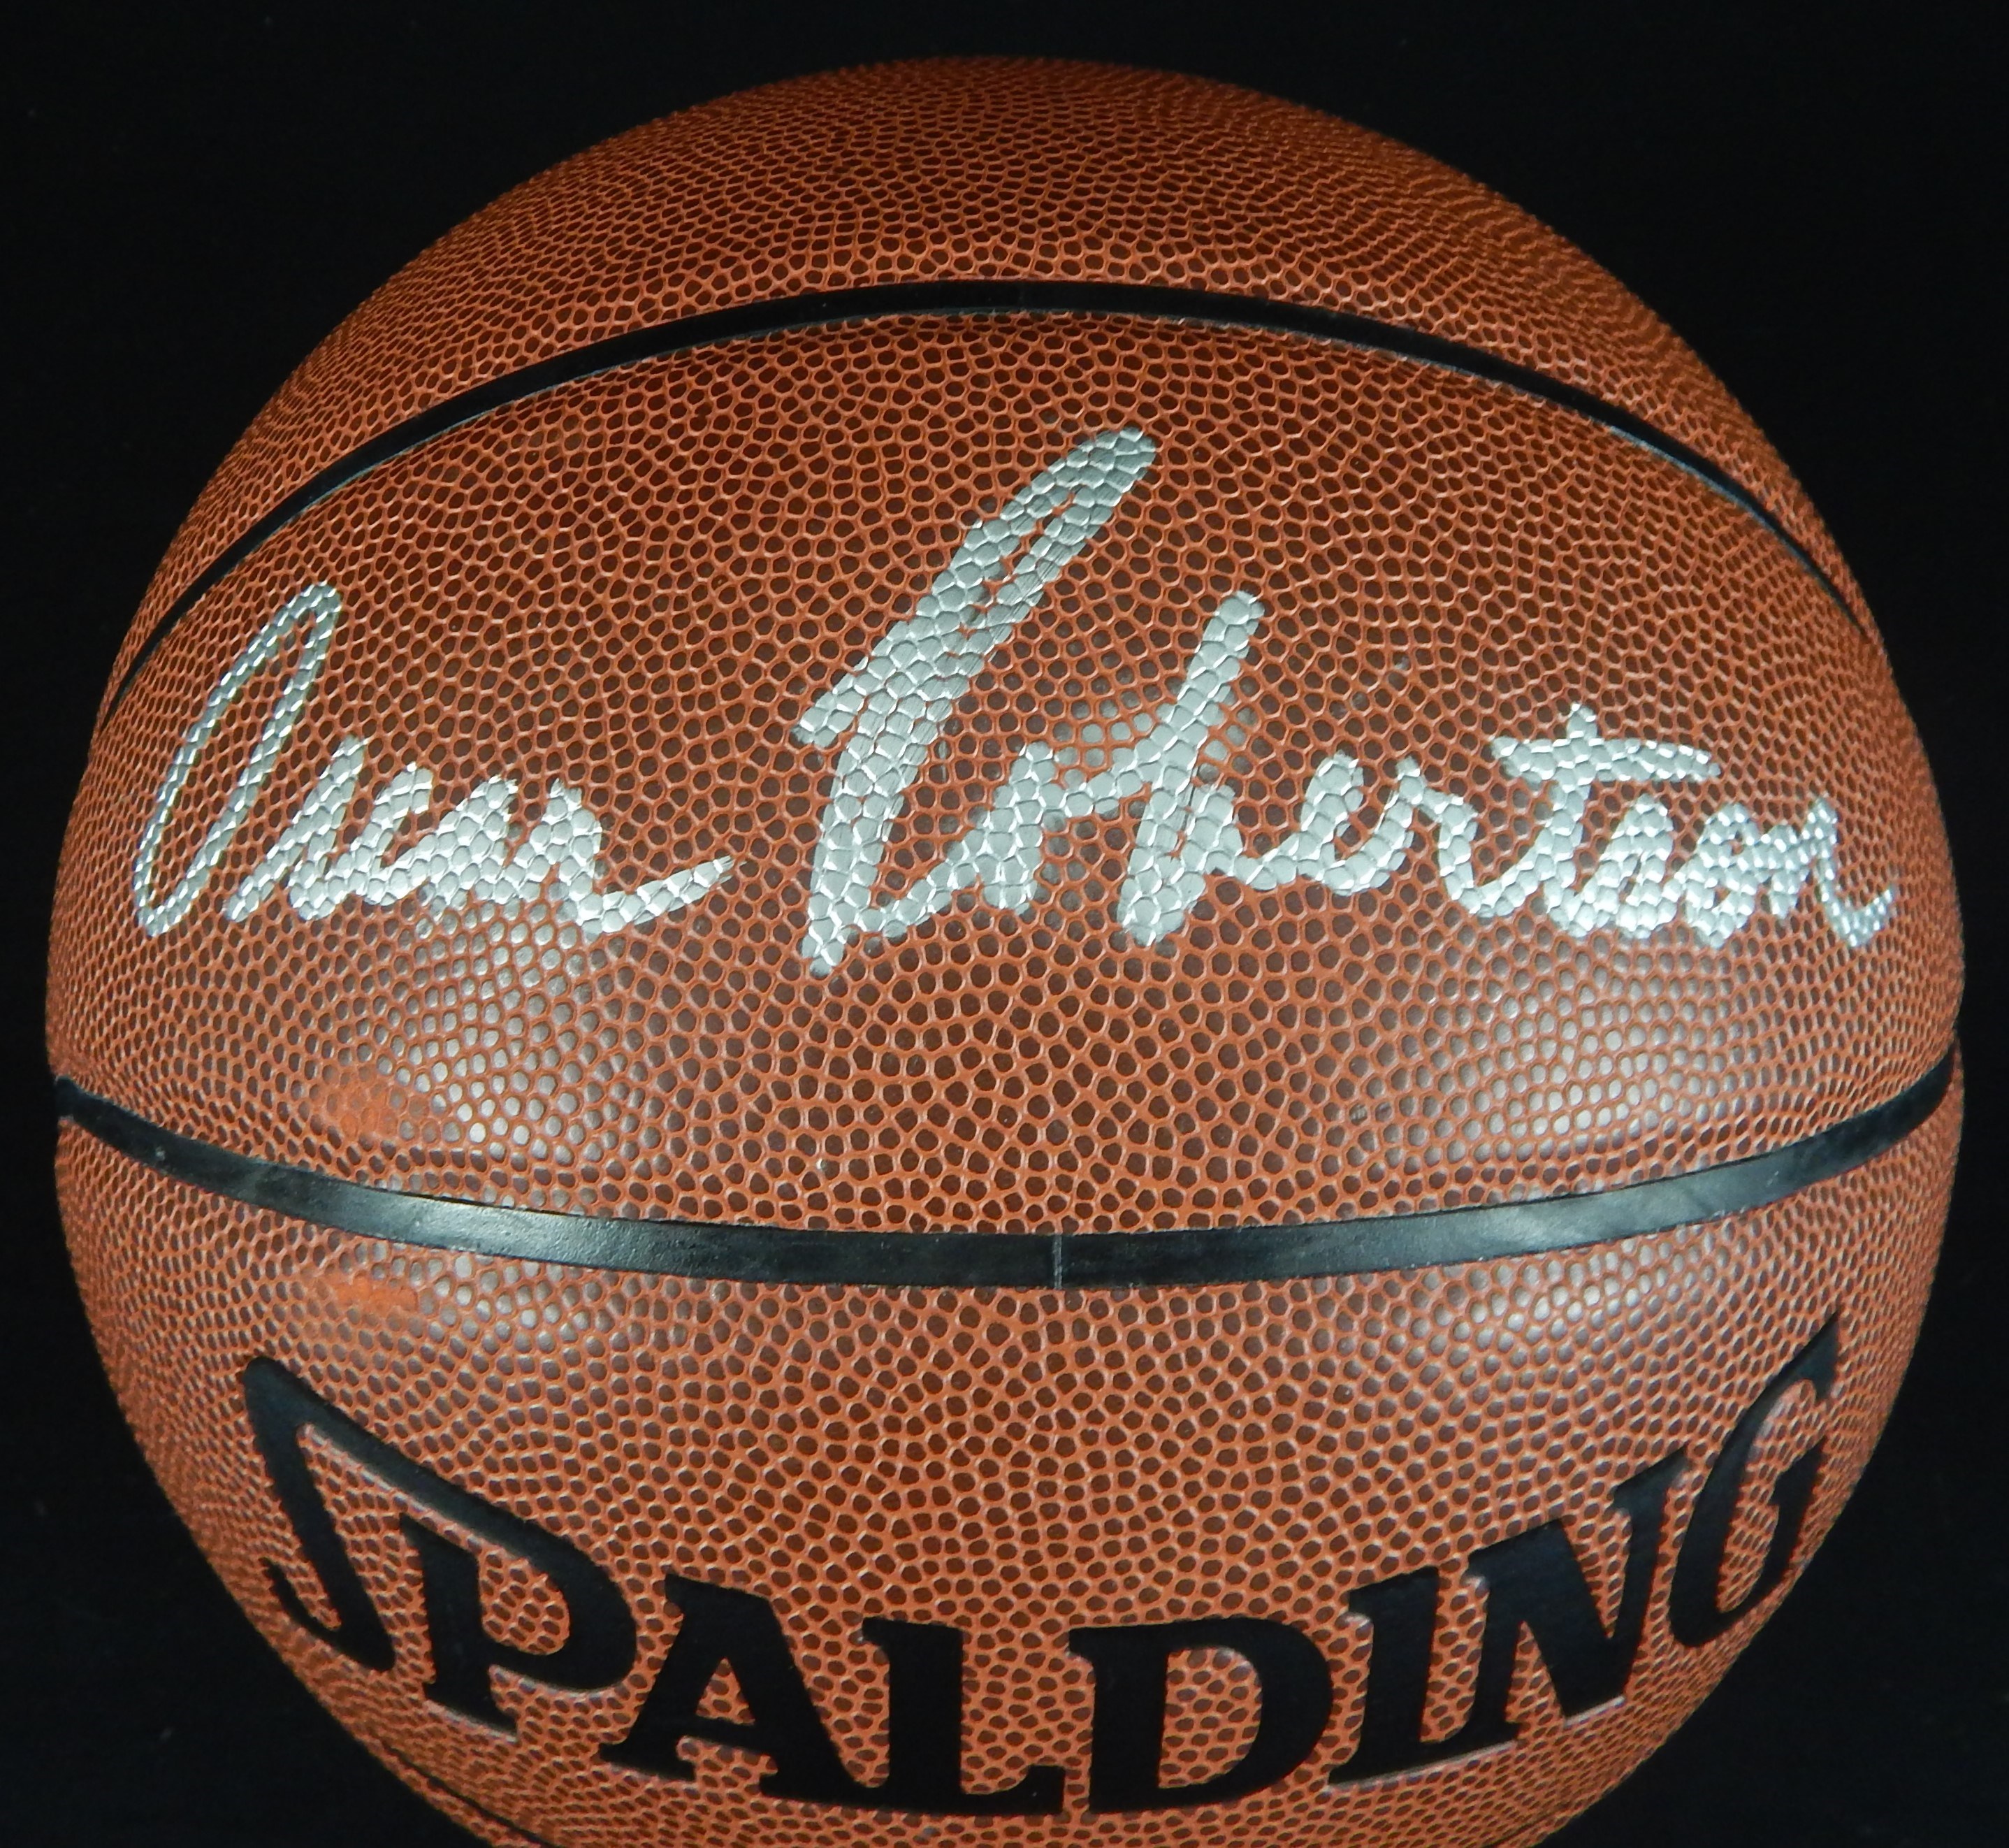 - Oscar Robertson Single Signed Basketball (PSA/DNA)